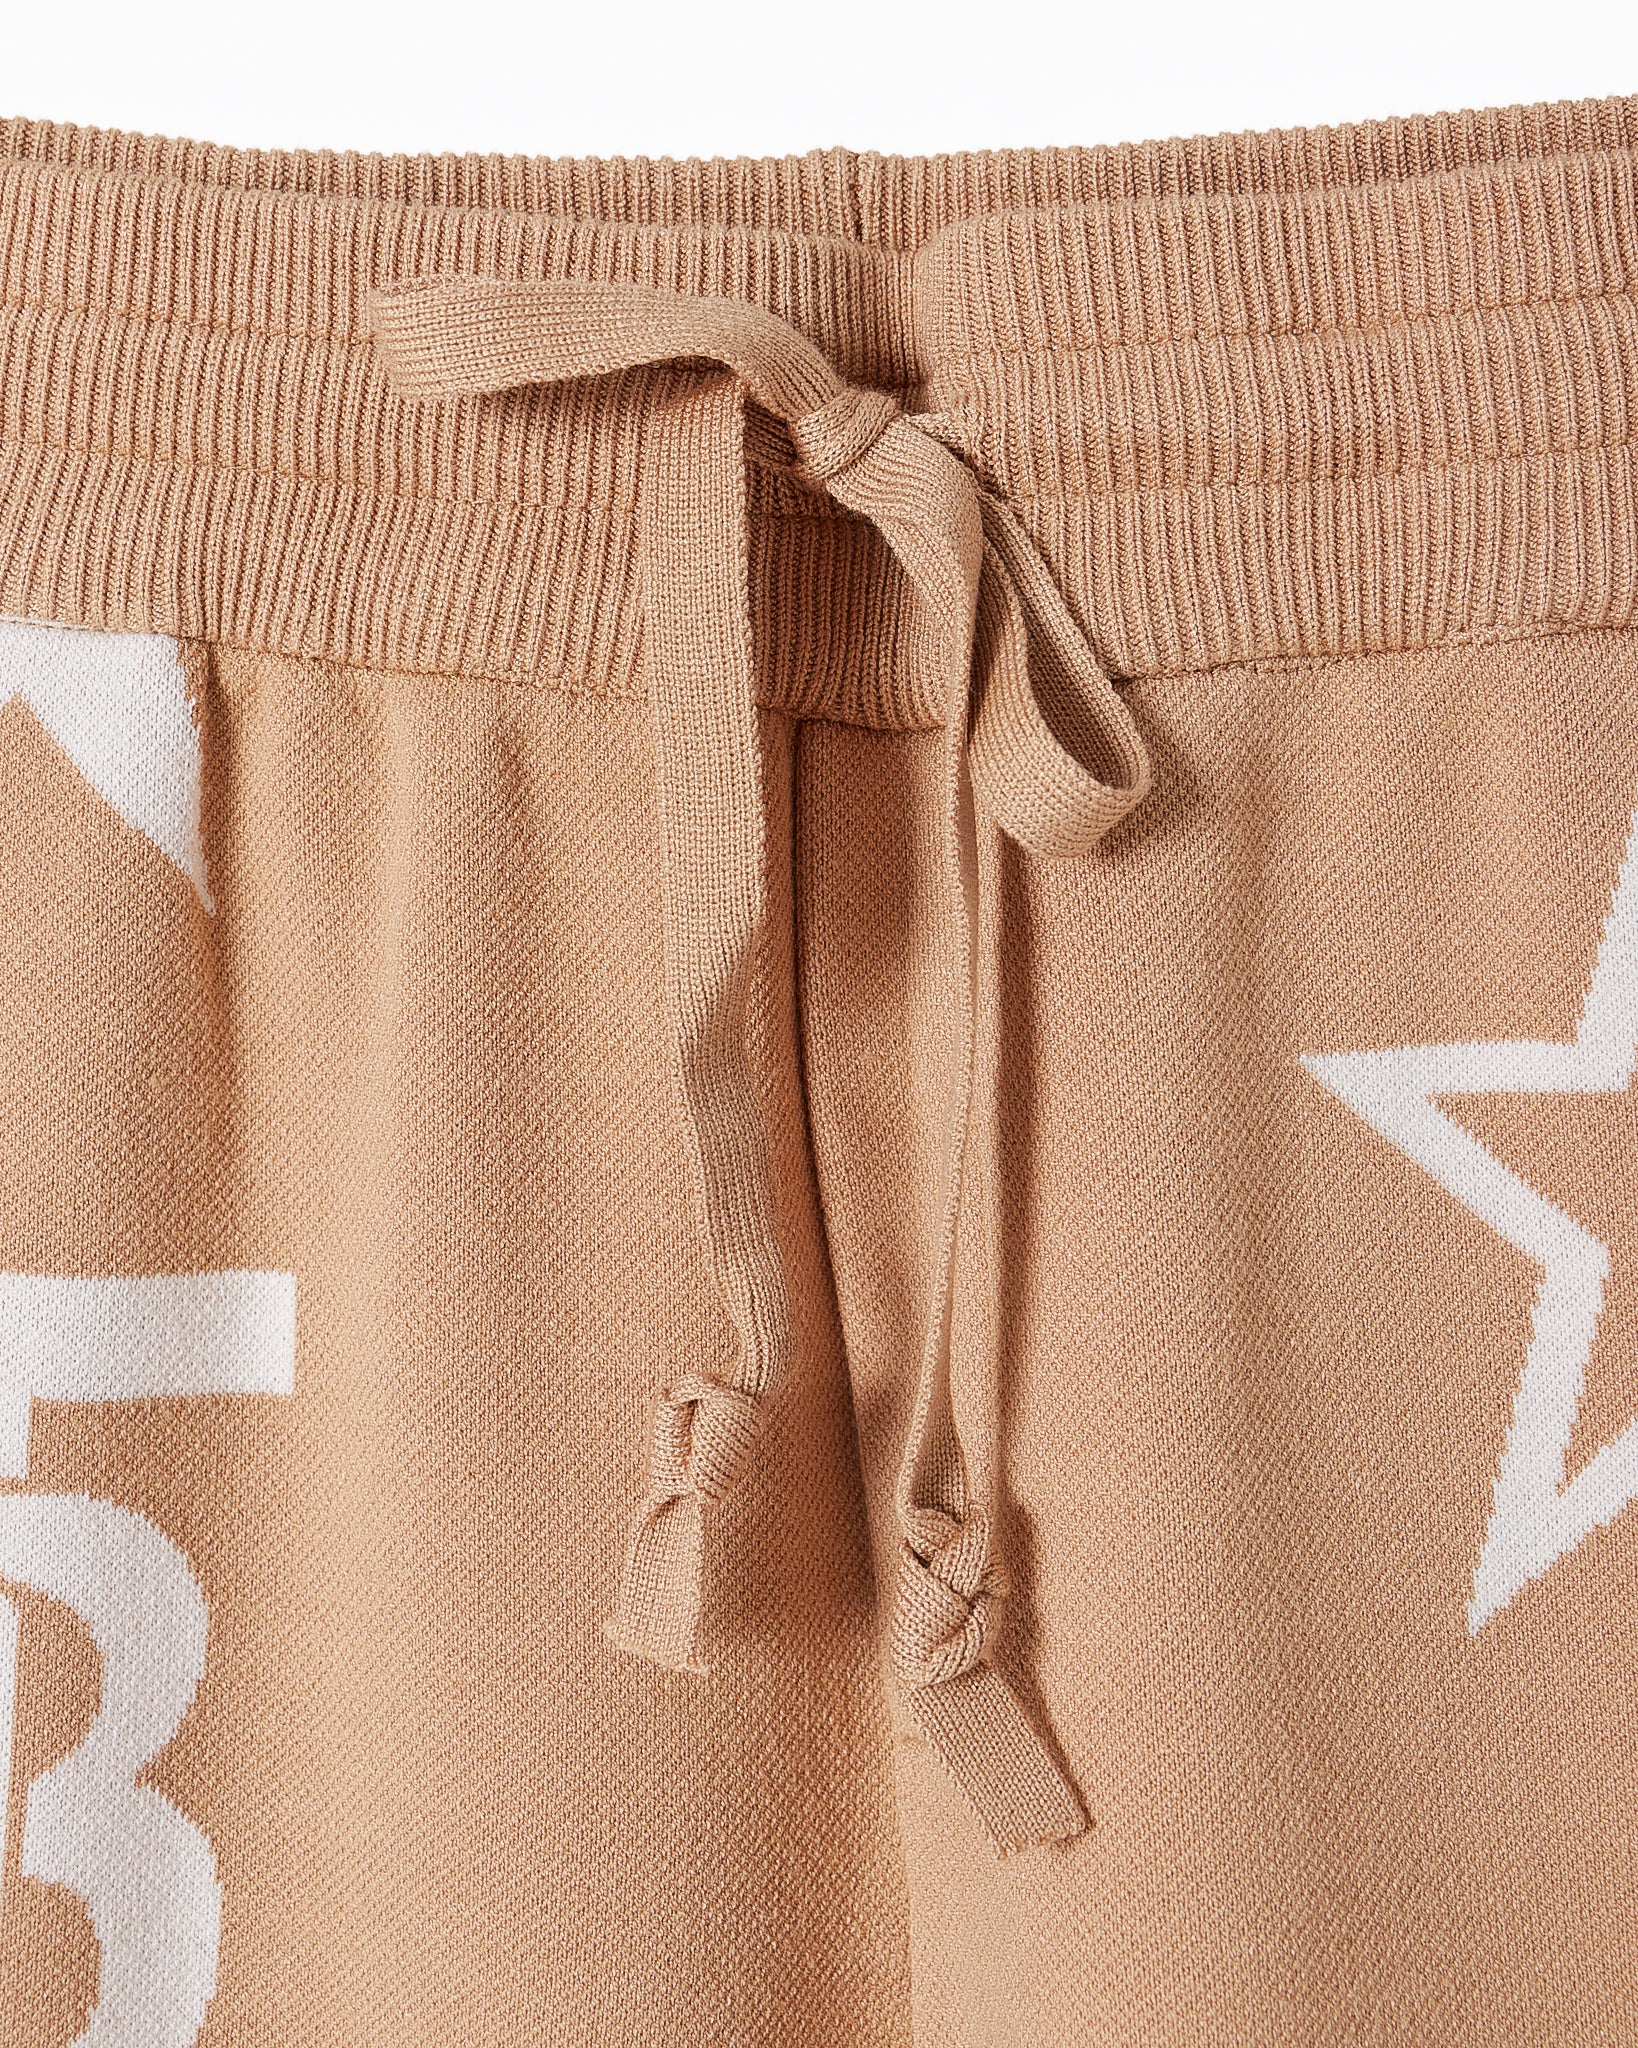 BUR Star Over Printed Men Brown Knit Shorts 69.90